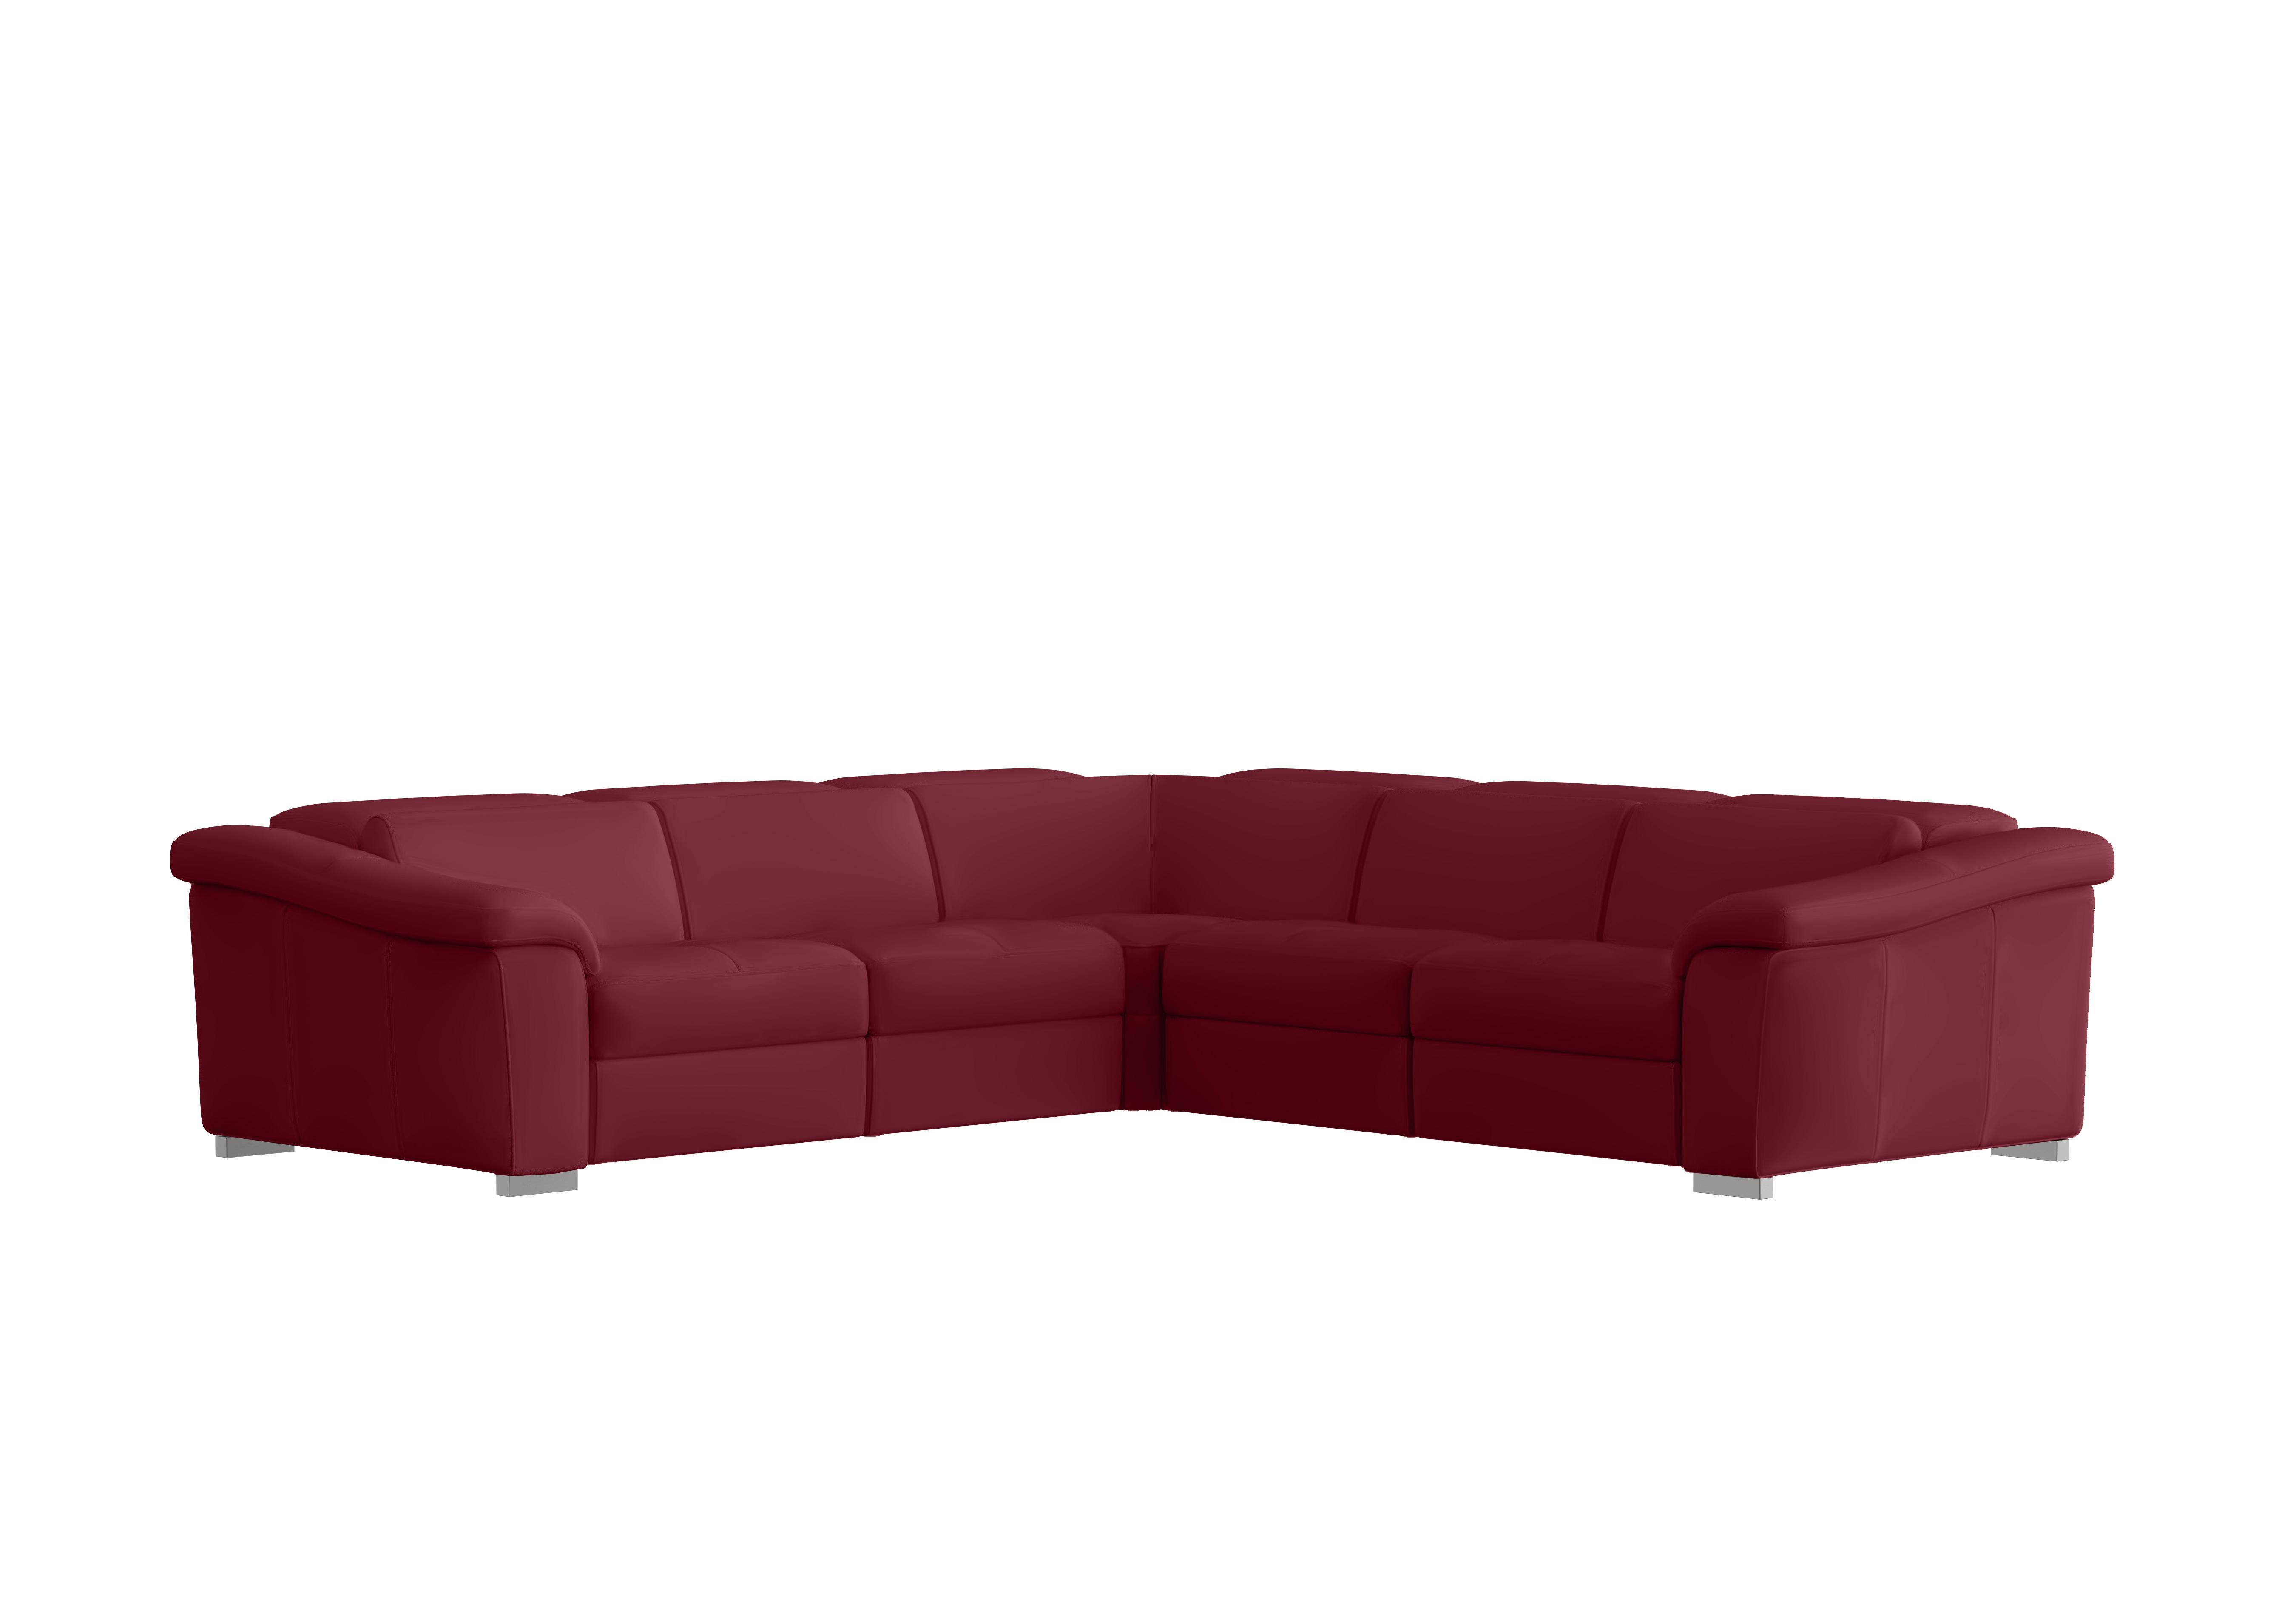 Galileo Leather Large Corner Sofa in Dali Bordeaux 1521 Ch on Furniture Village